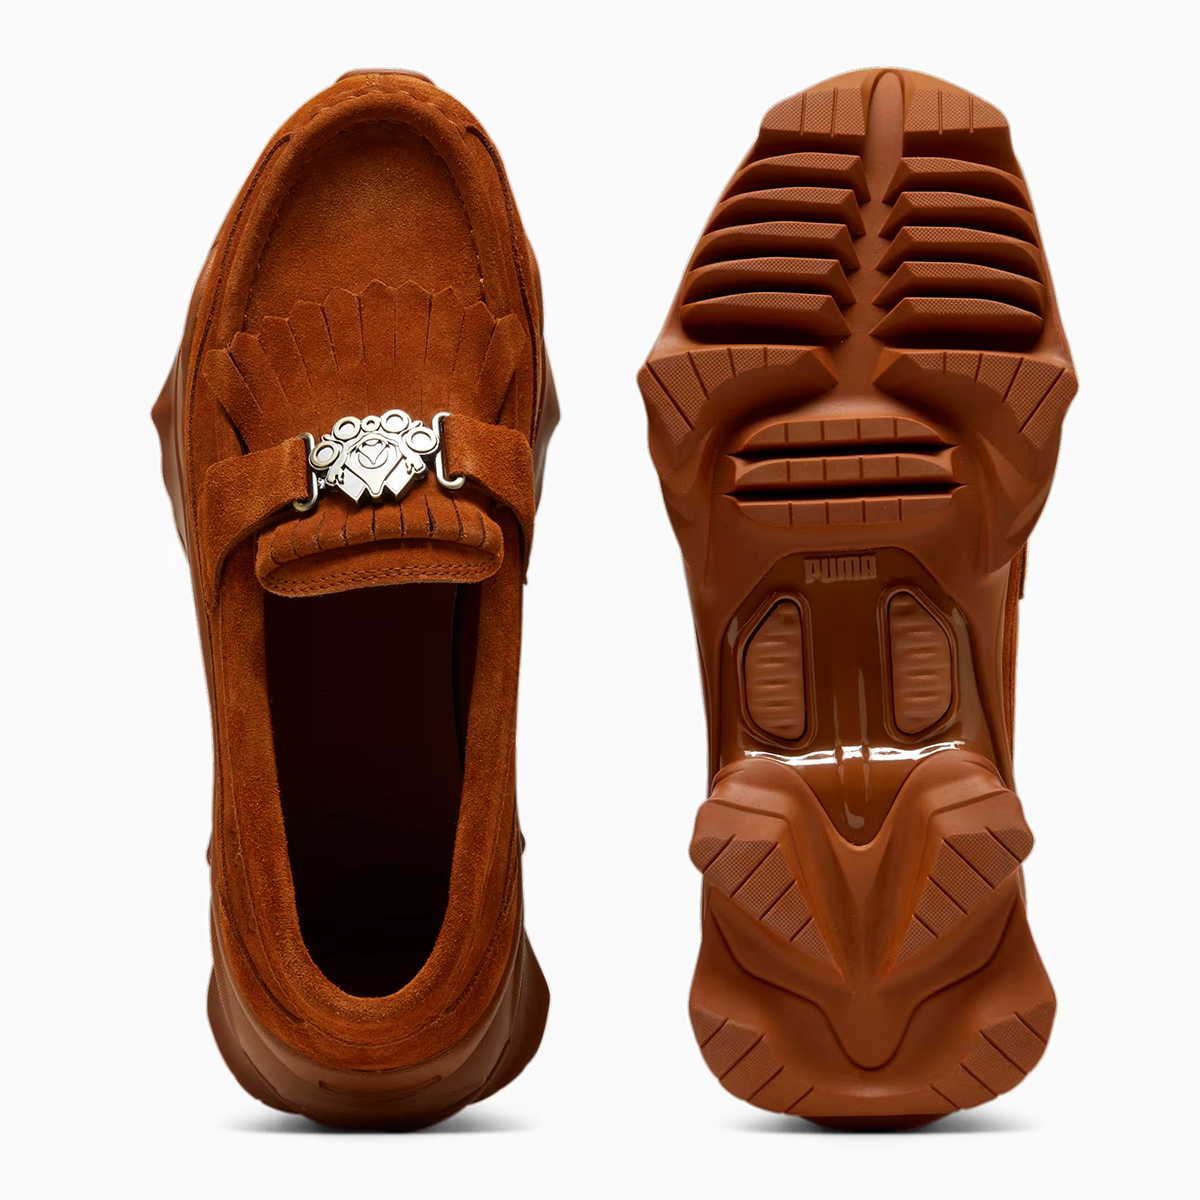 Palomo Puma Nitefox Leather Sneaker Loafer Teak 396816 01 3